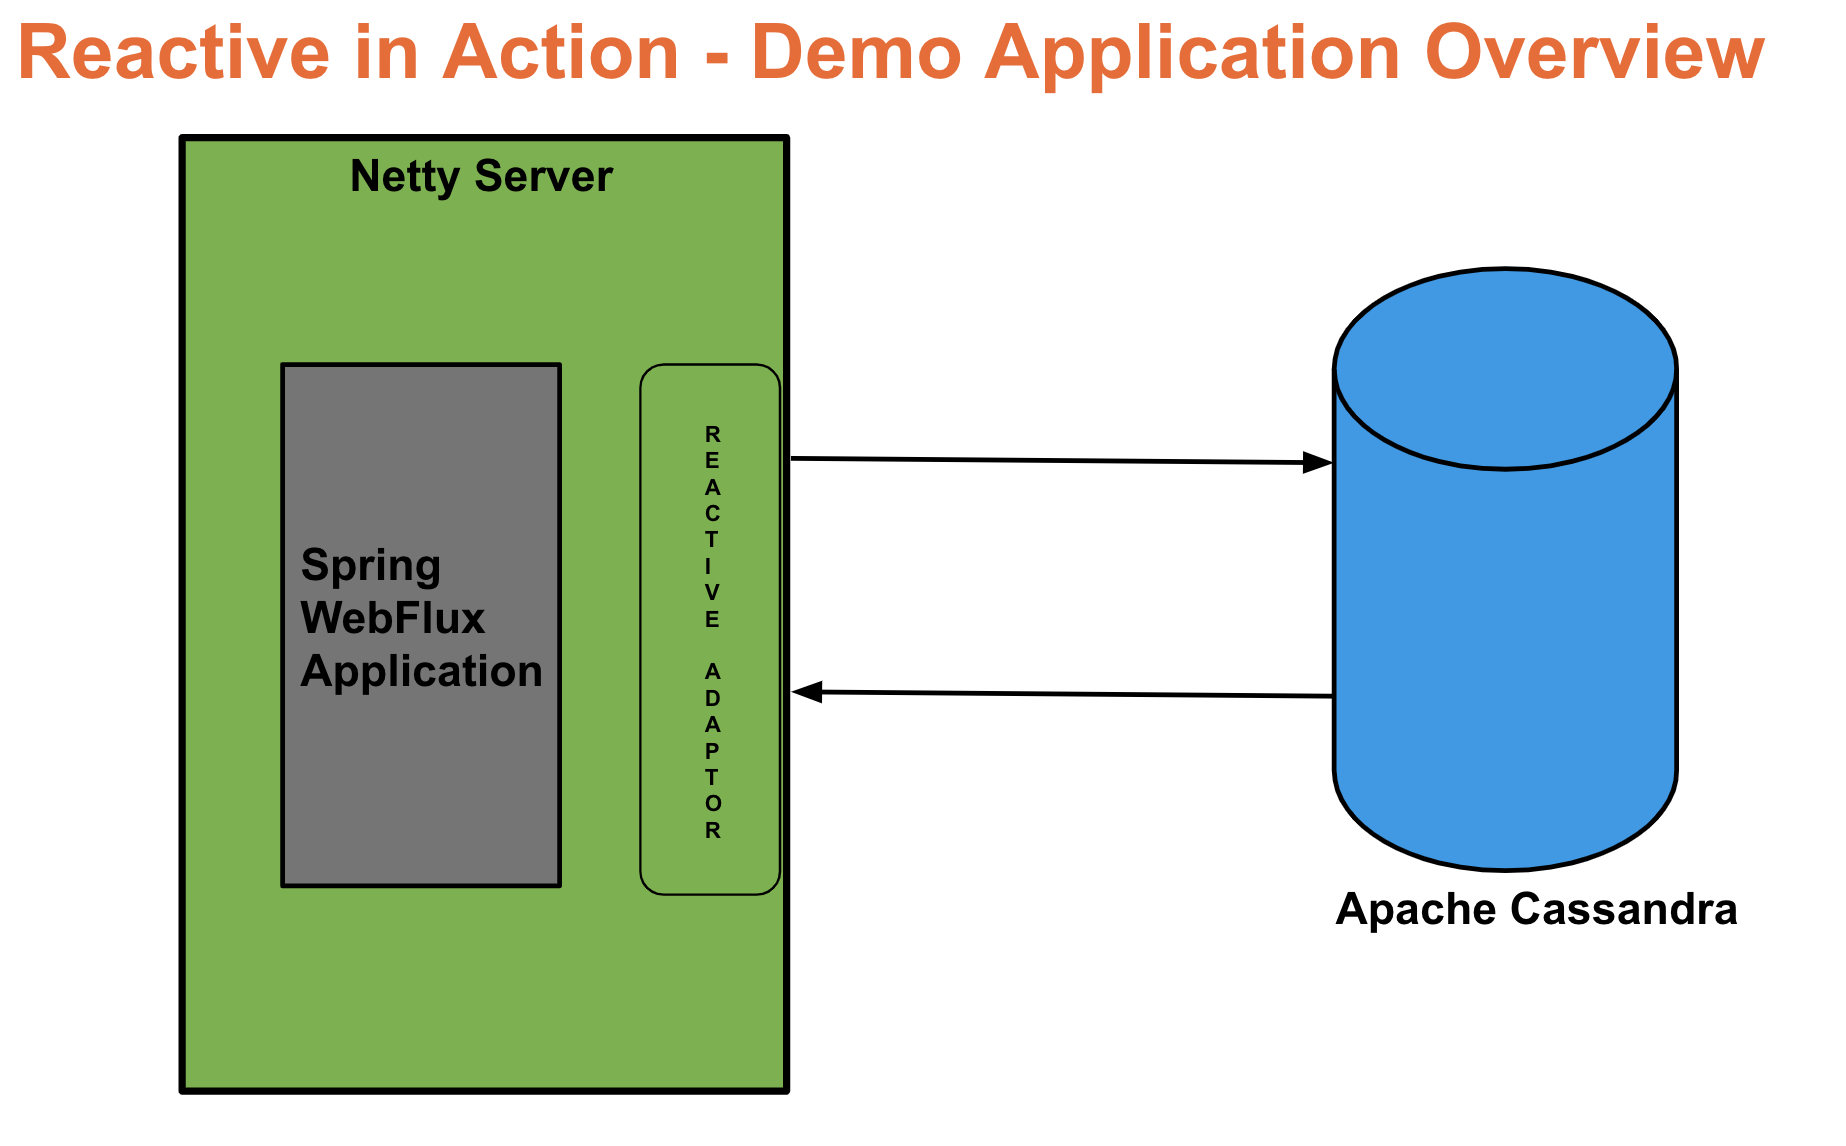 Reactive demo application workflow